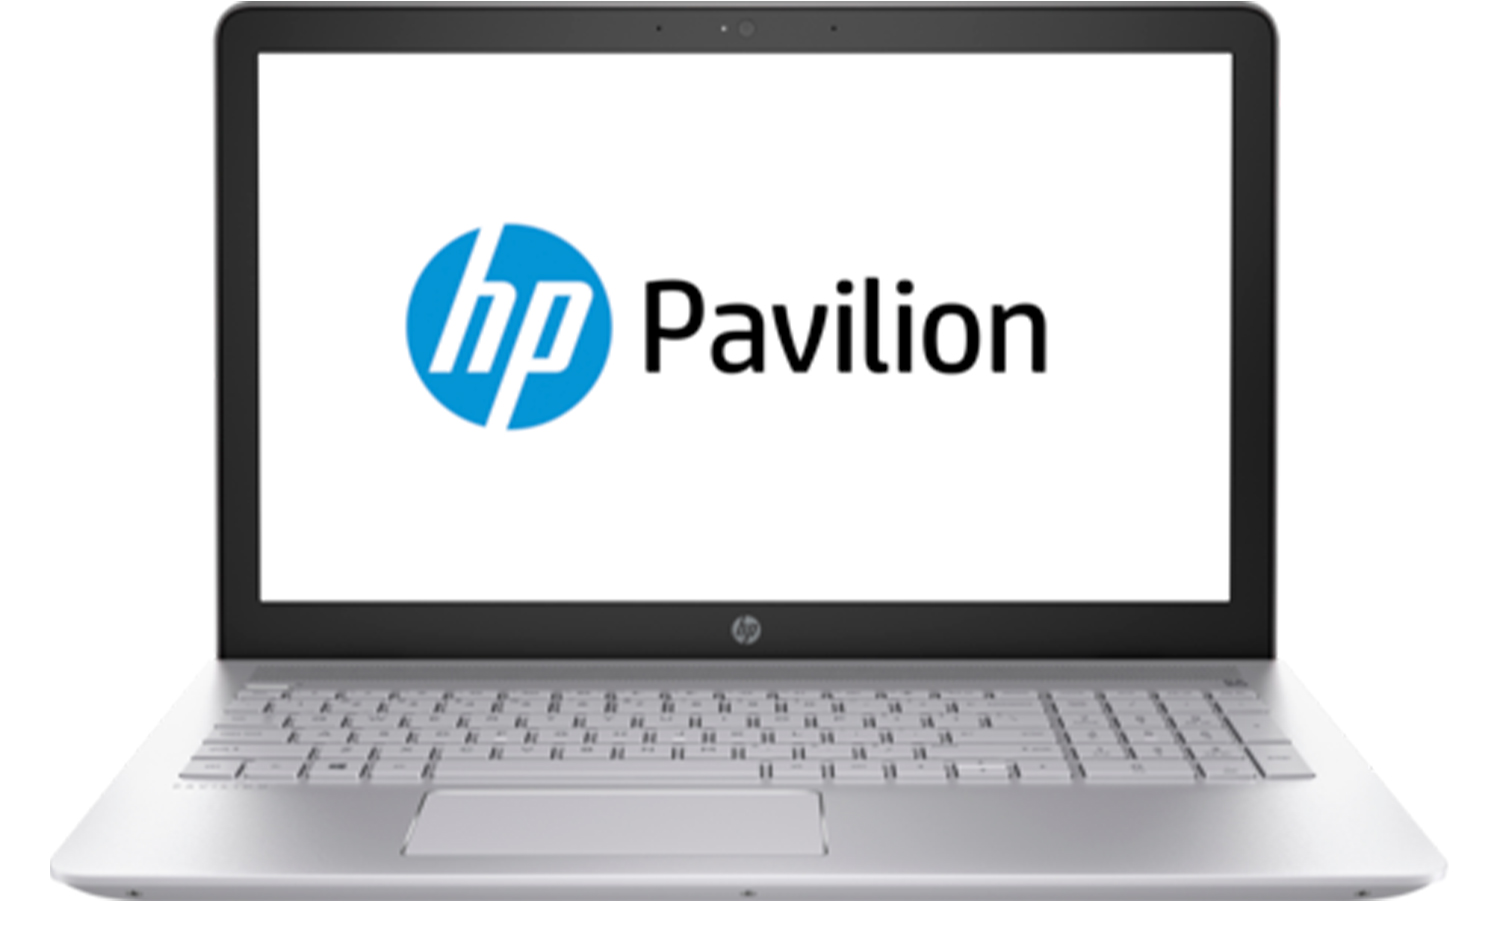 HP Pavilion Laptop 15 cc055od Intel Core i7 7th Gen 8GB RAM 1TB HDD Windows 10 Home